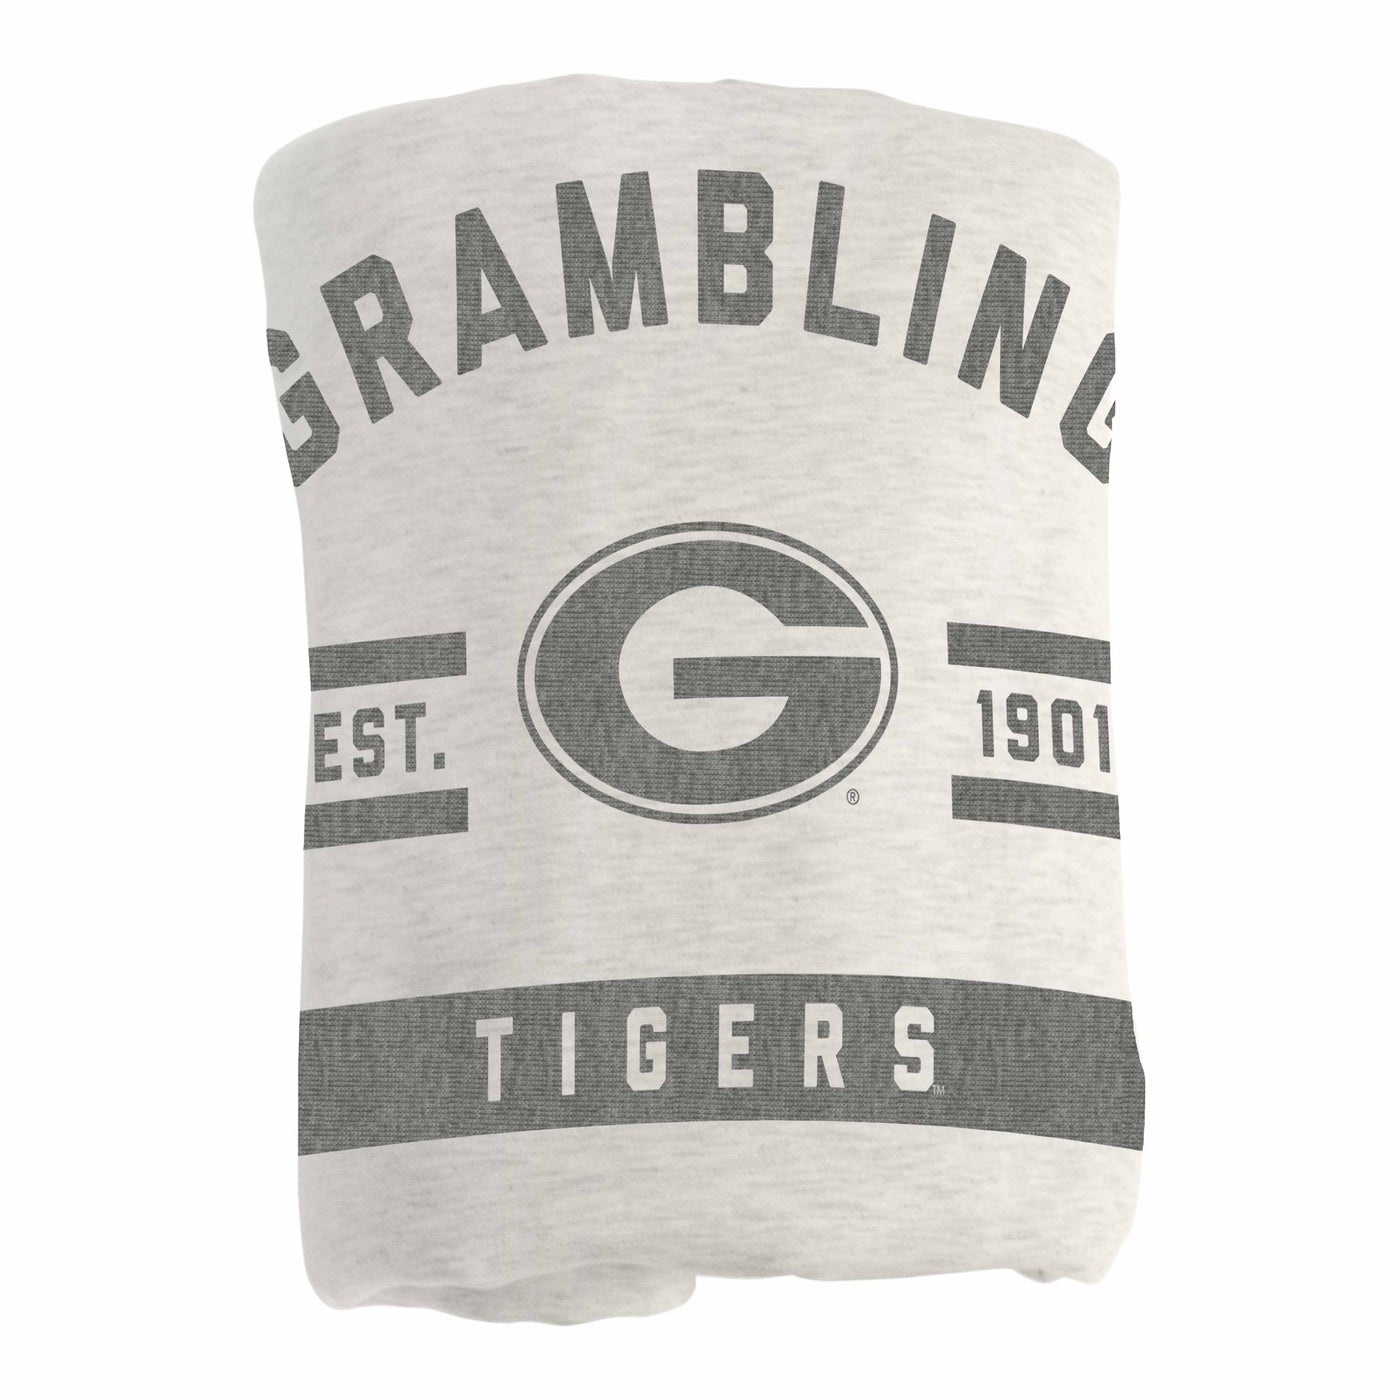 Grambling State Sublimated Sweatshirt Blanket